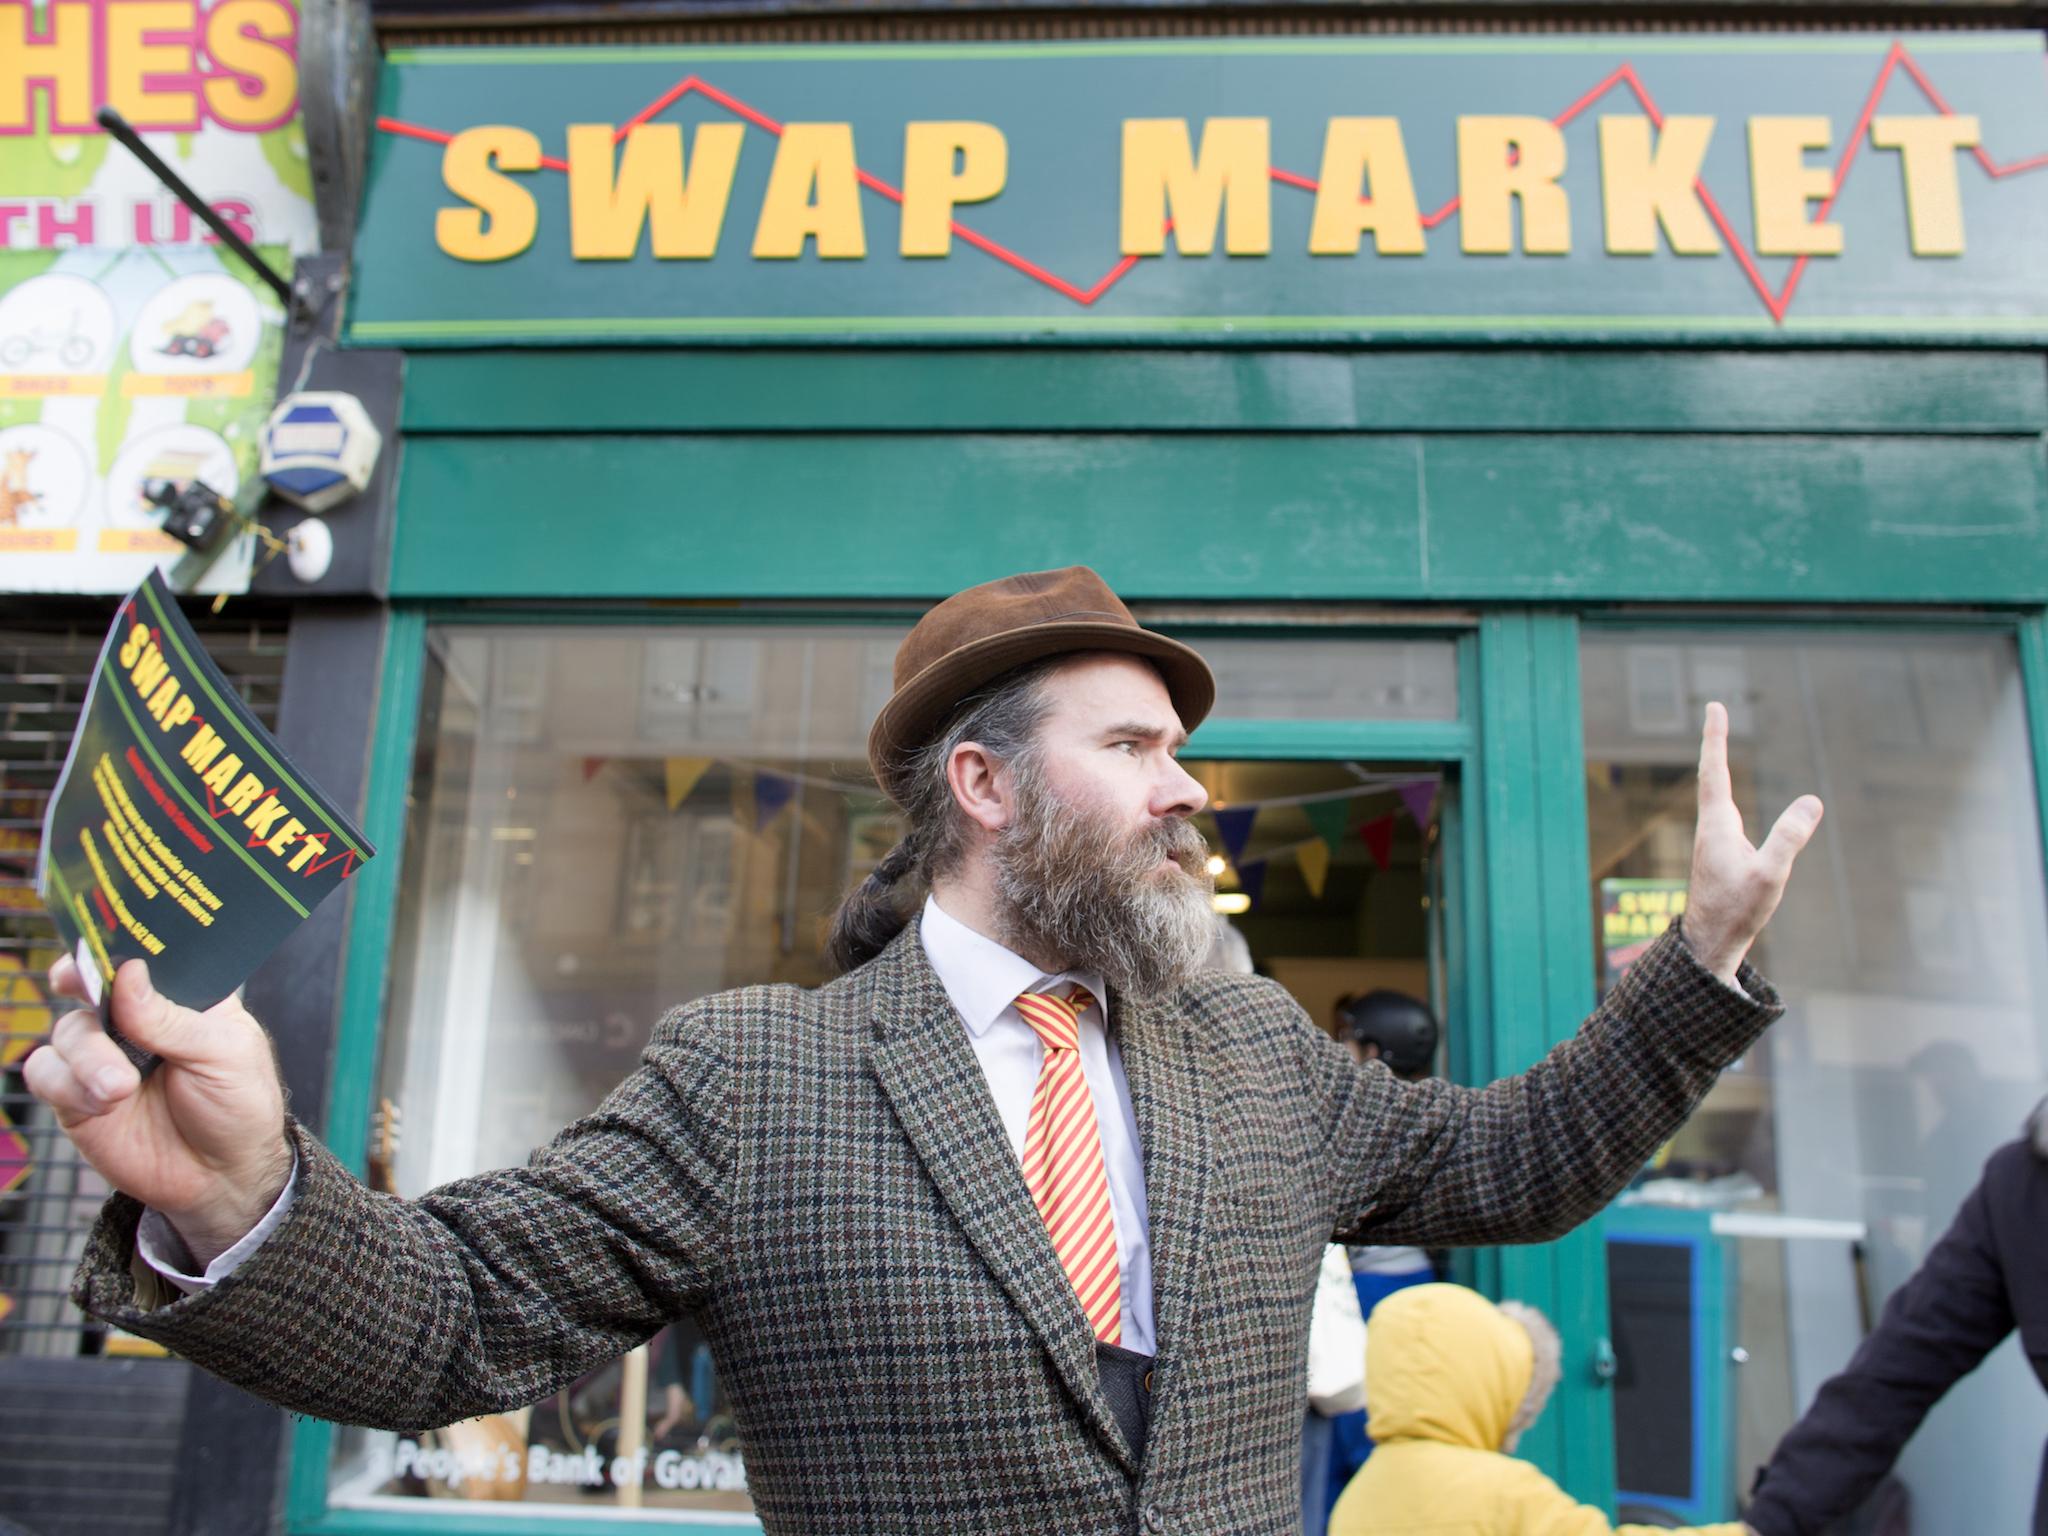 Innes Smith outside the swap market in Glasgow